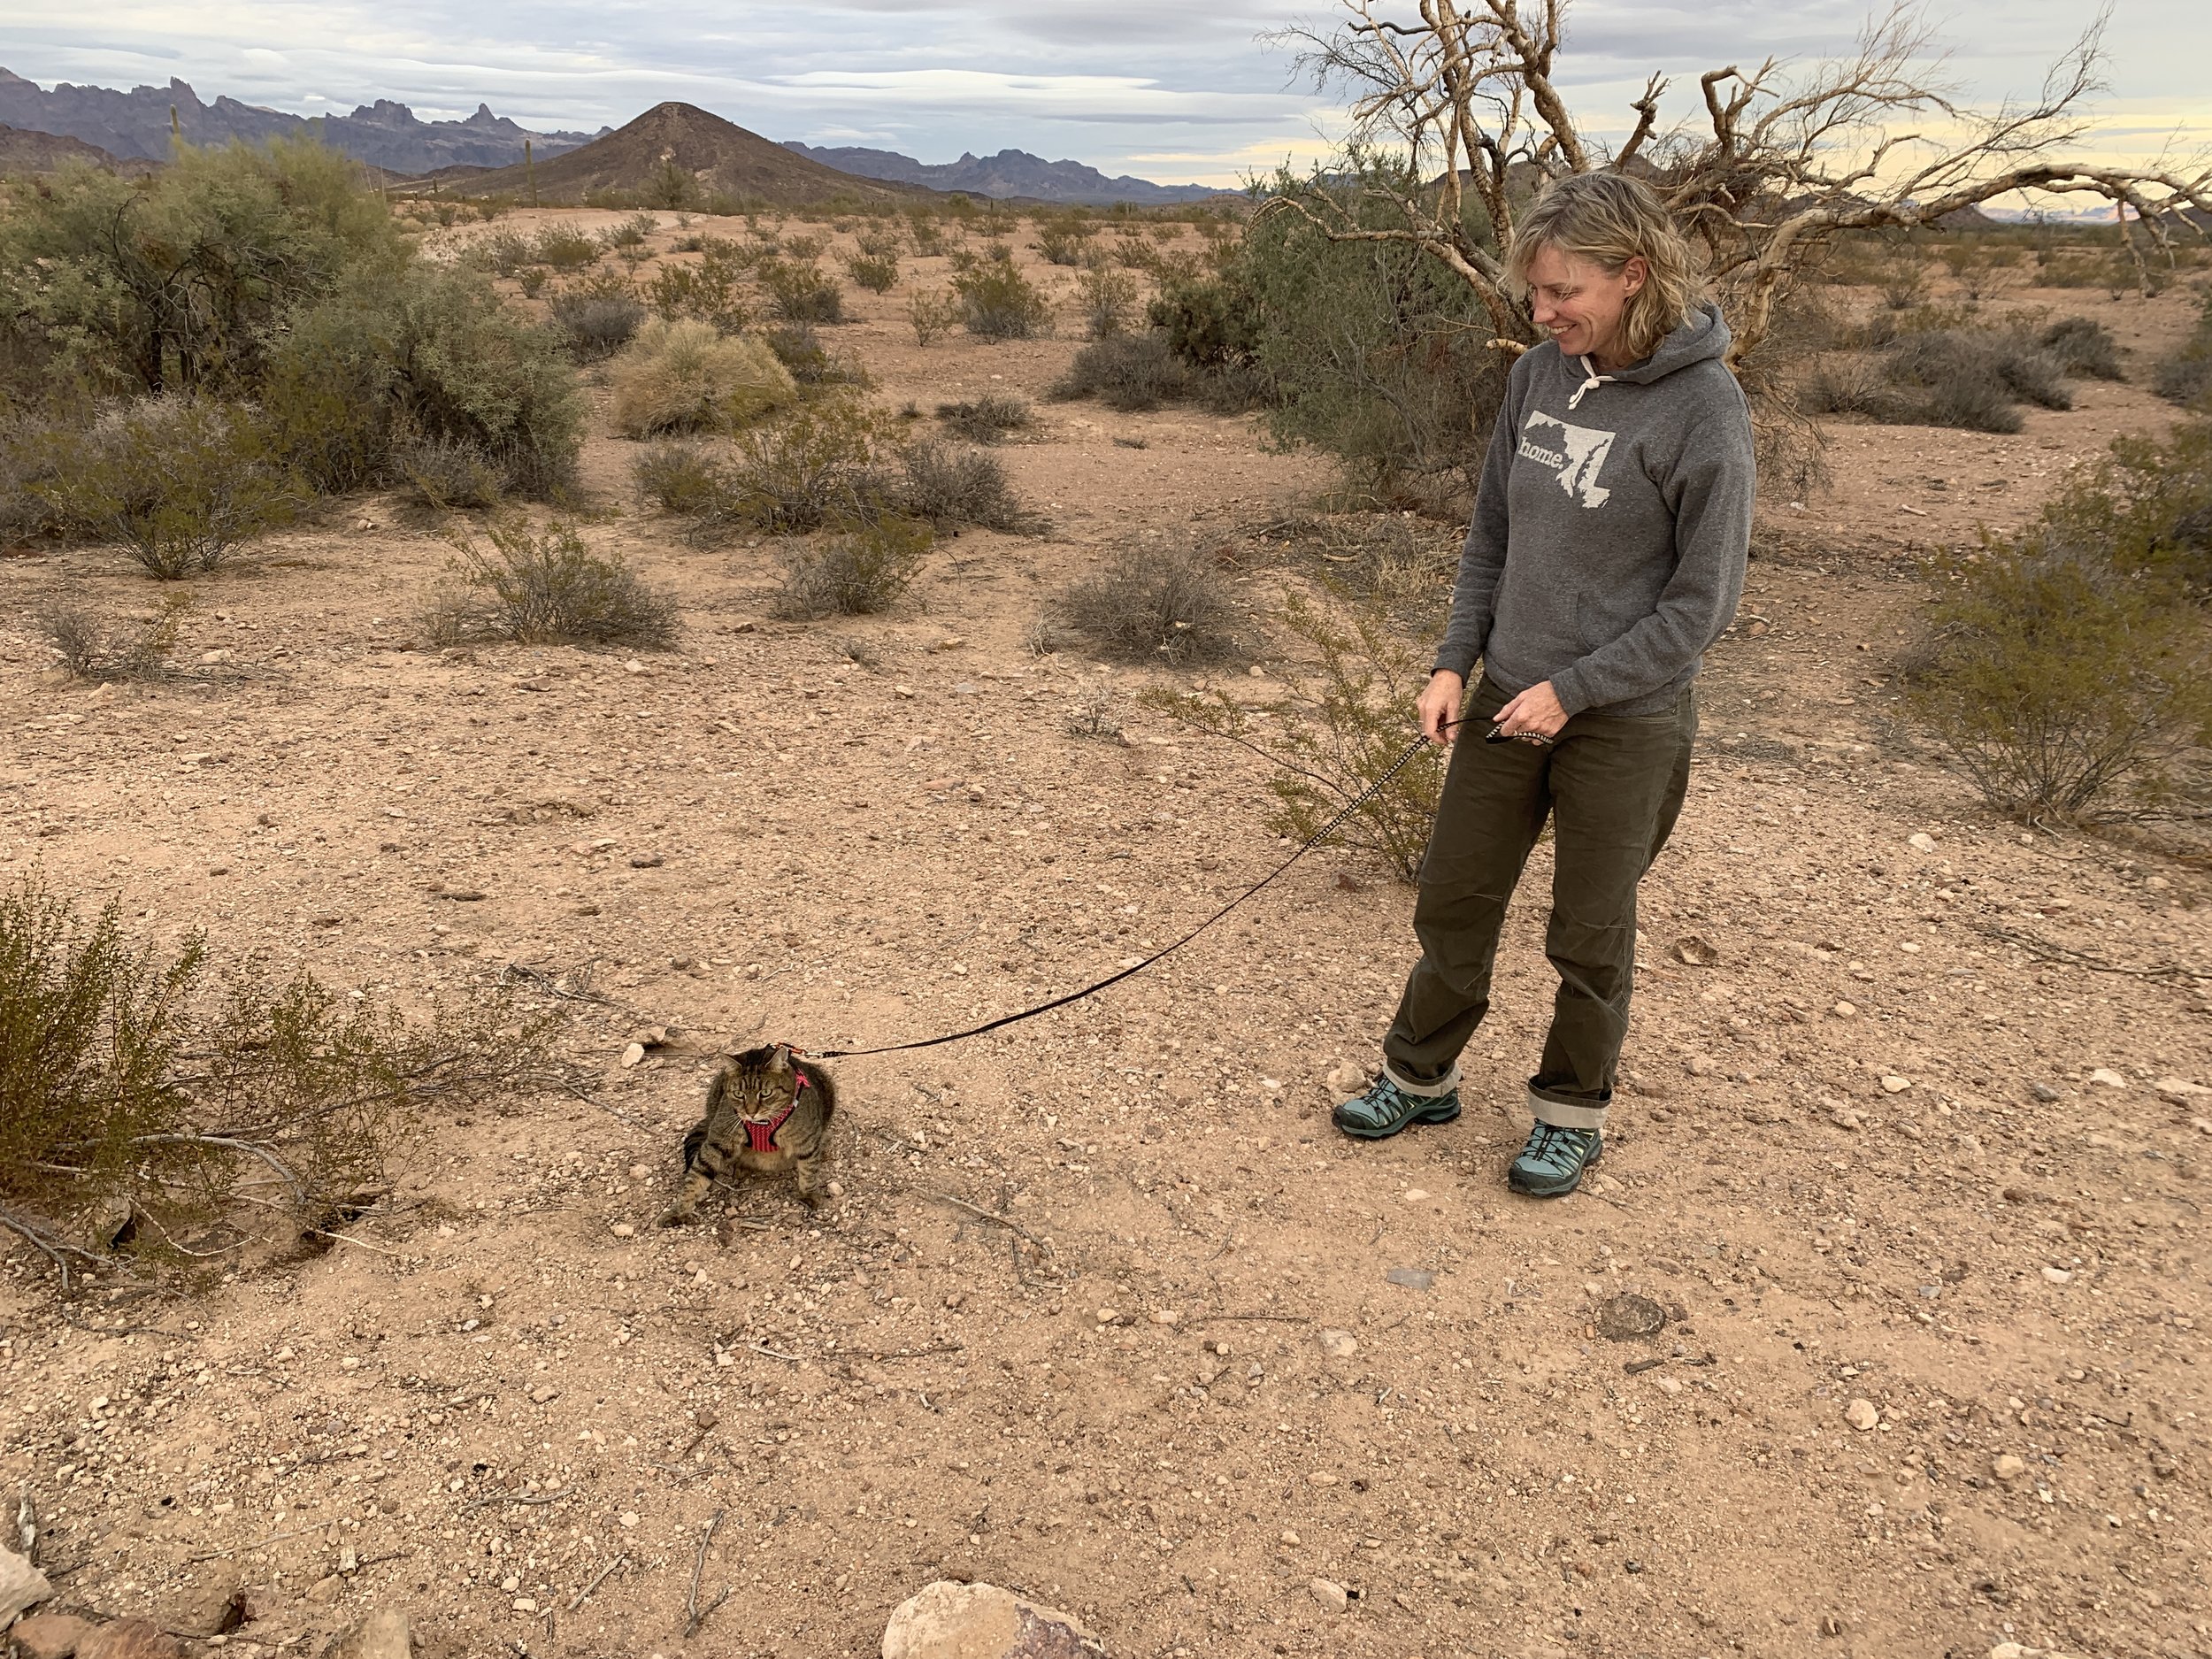 Ruthie exploring the desert